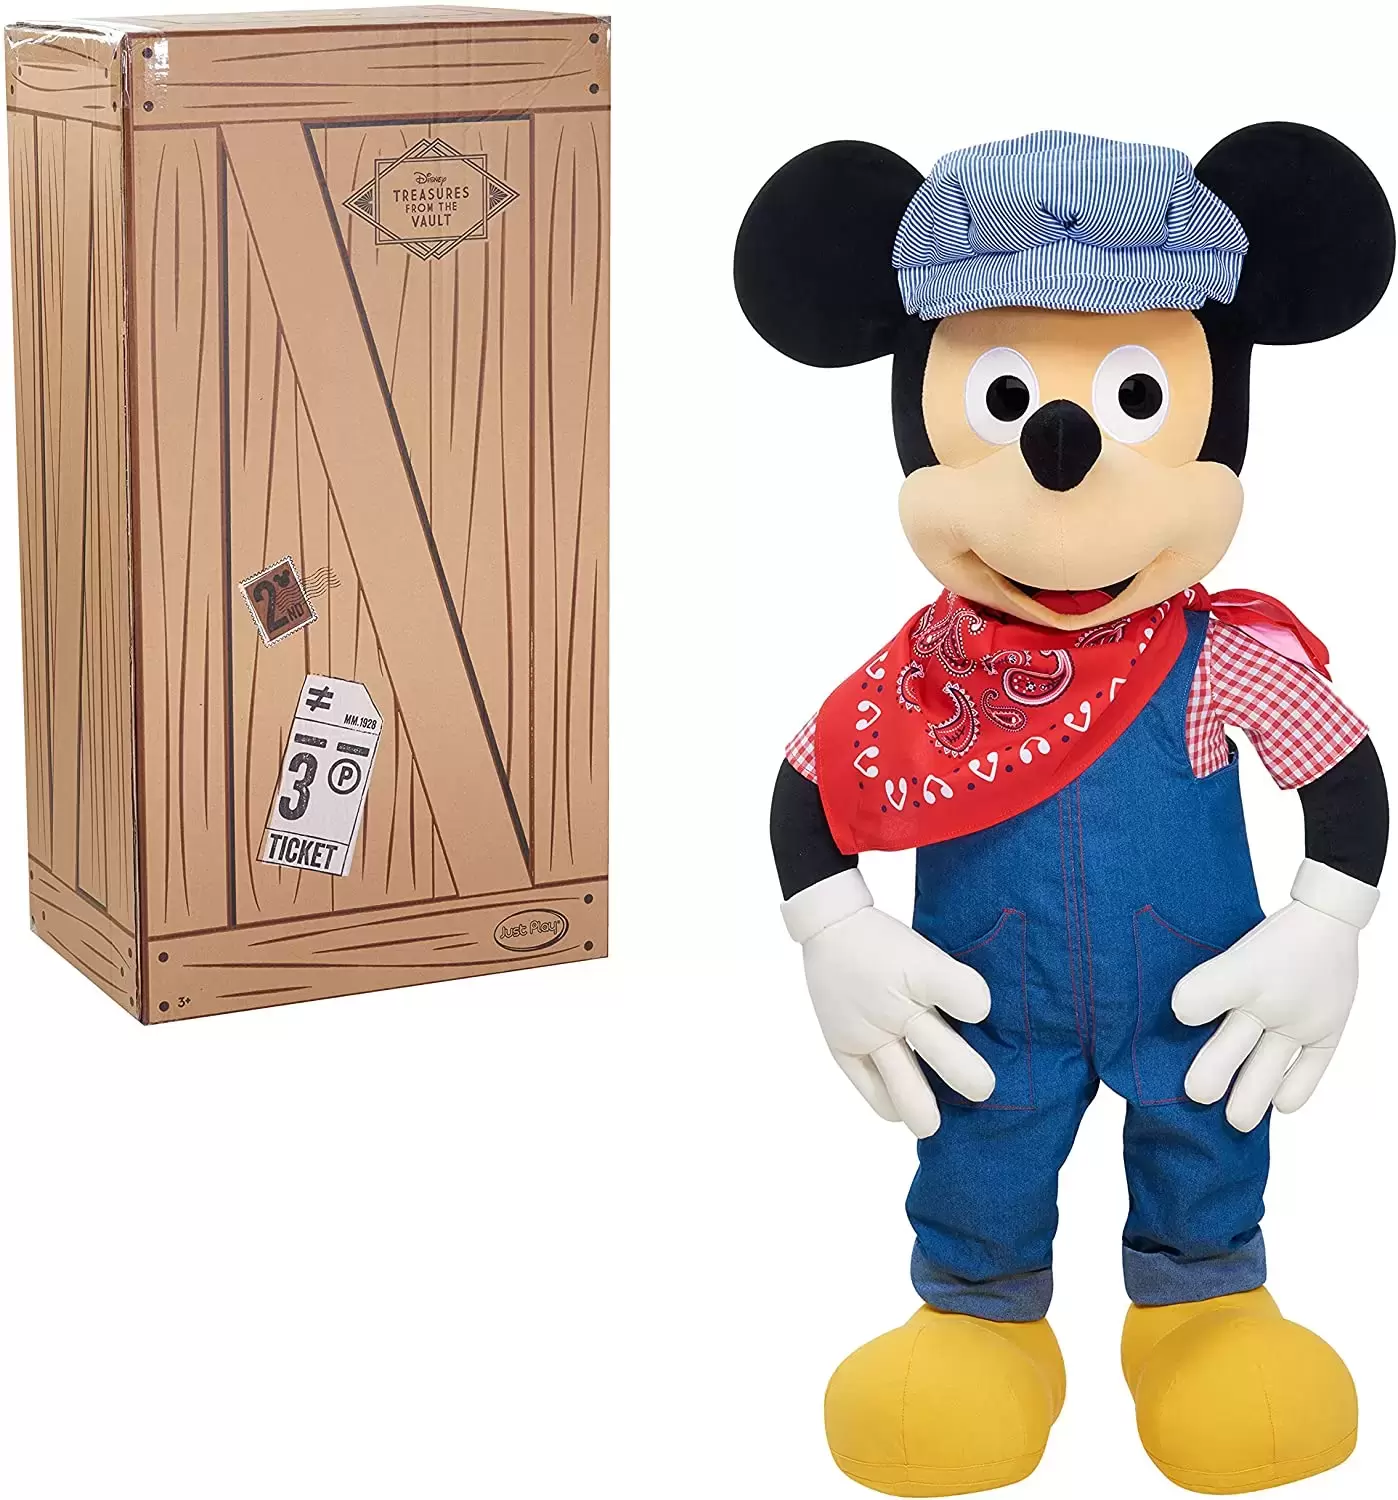 Walt Disney Plush - Disney Treasures from the Vault - Engineer Mickey Mouse